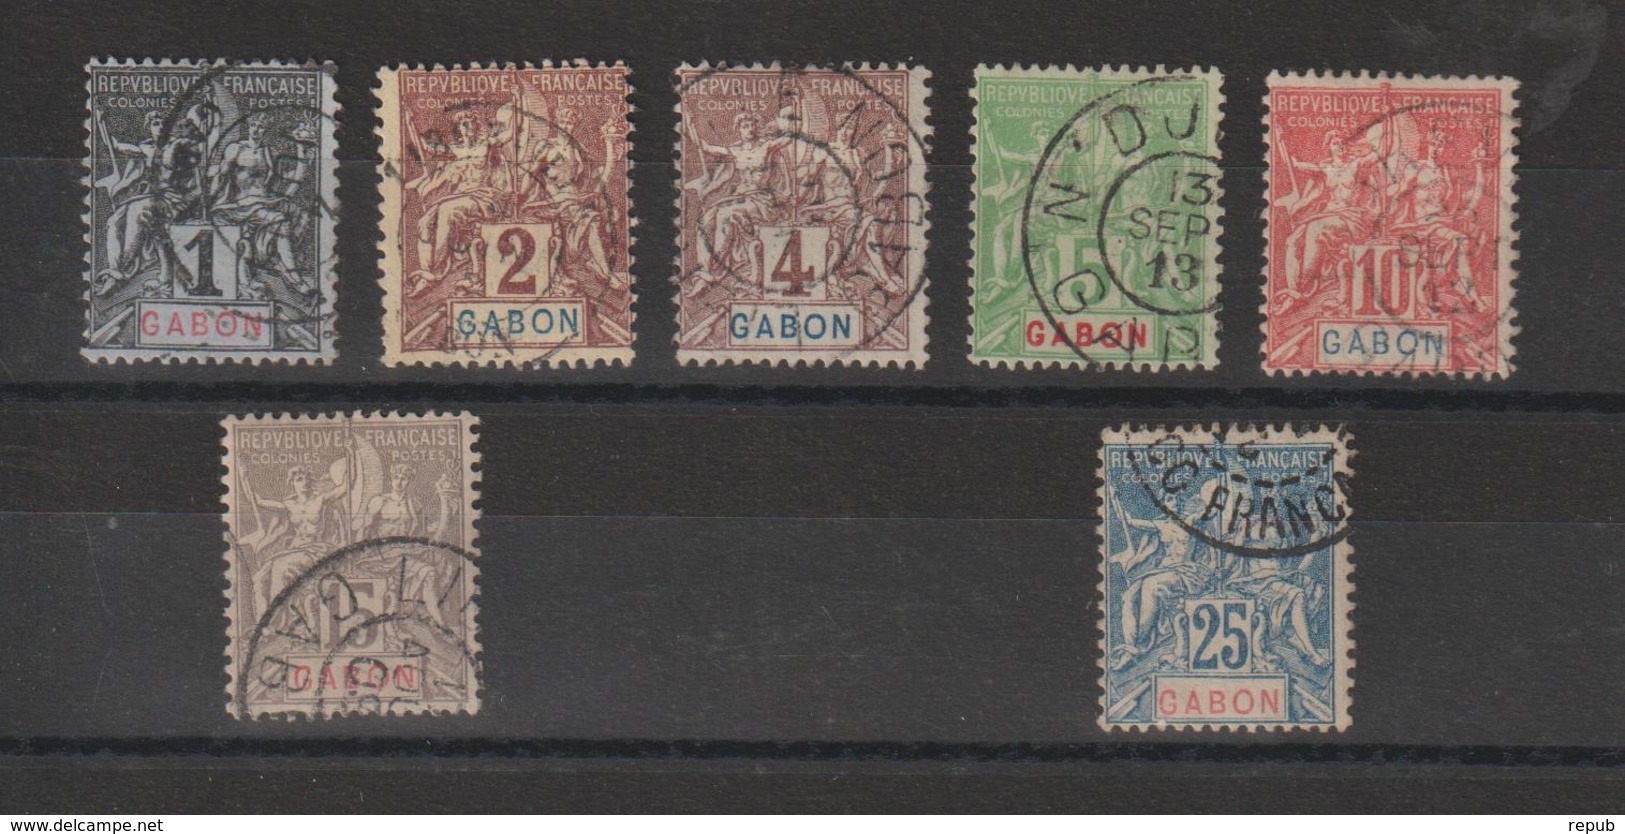 Gabon 1904-7 N° 16 à 21 + 23 Soit 7 Val Oblit / Used - Used Stamps